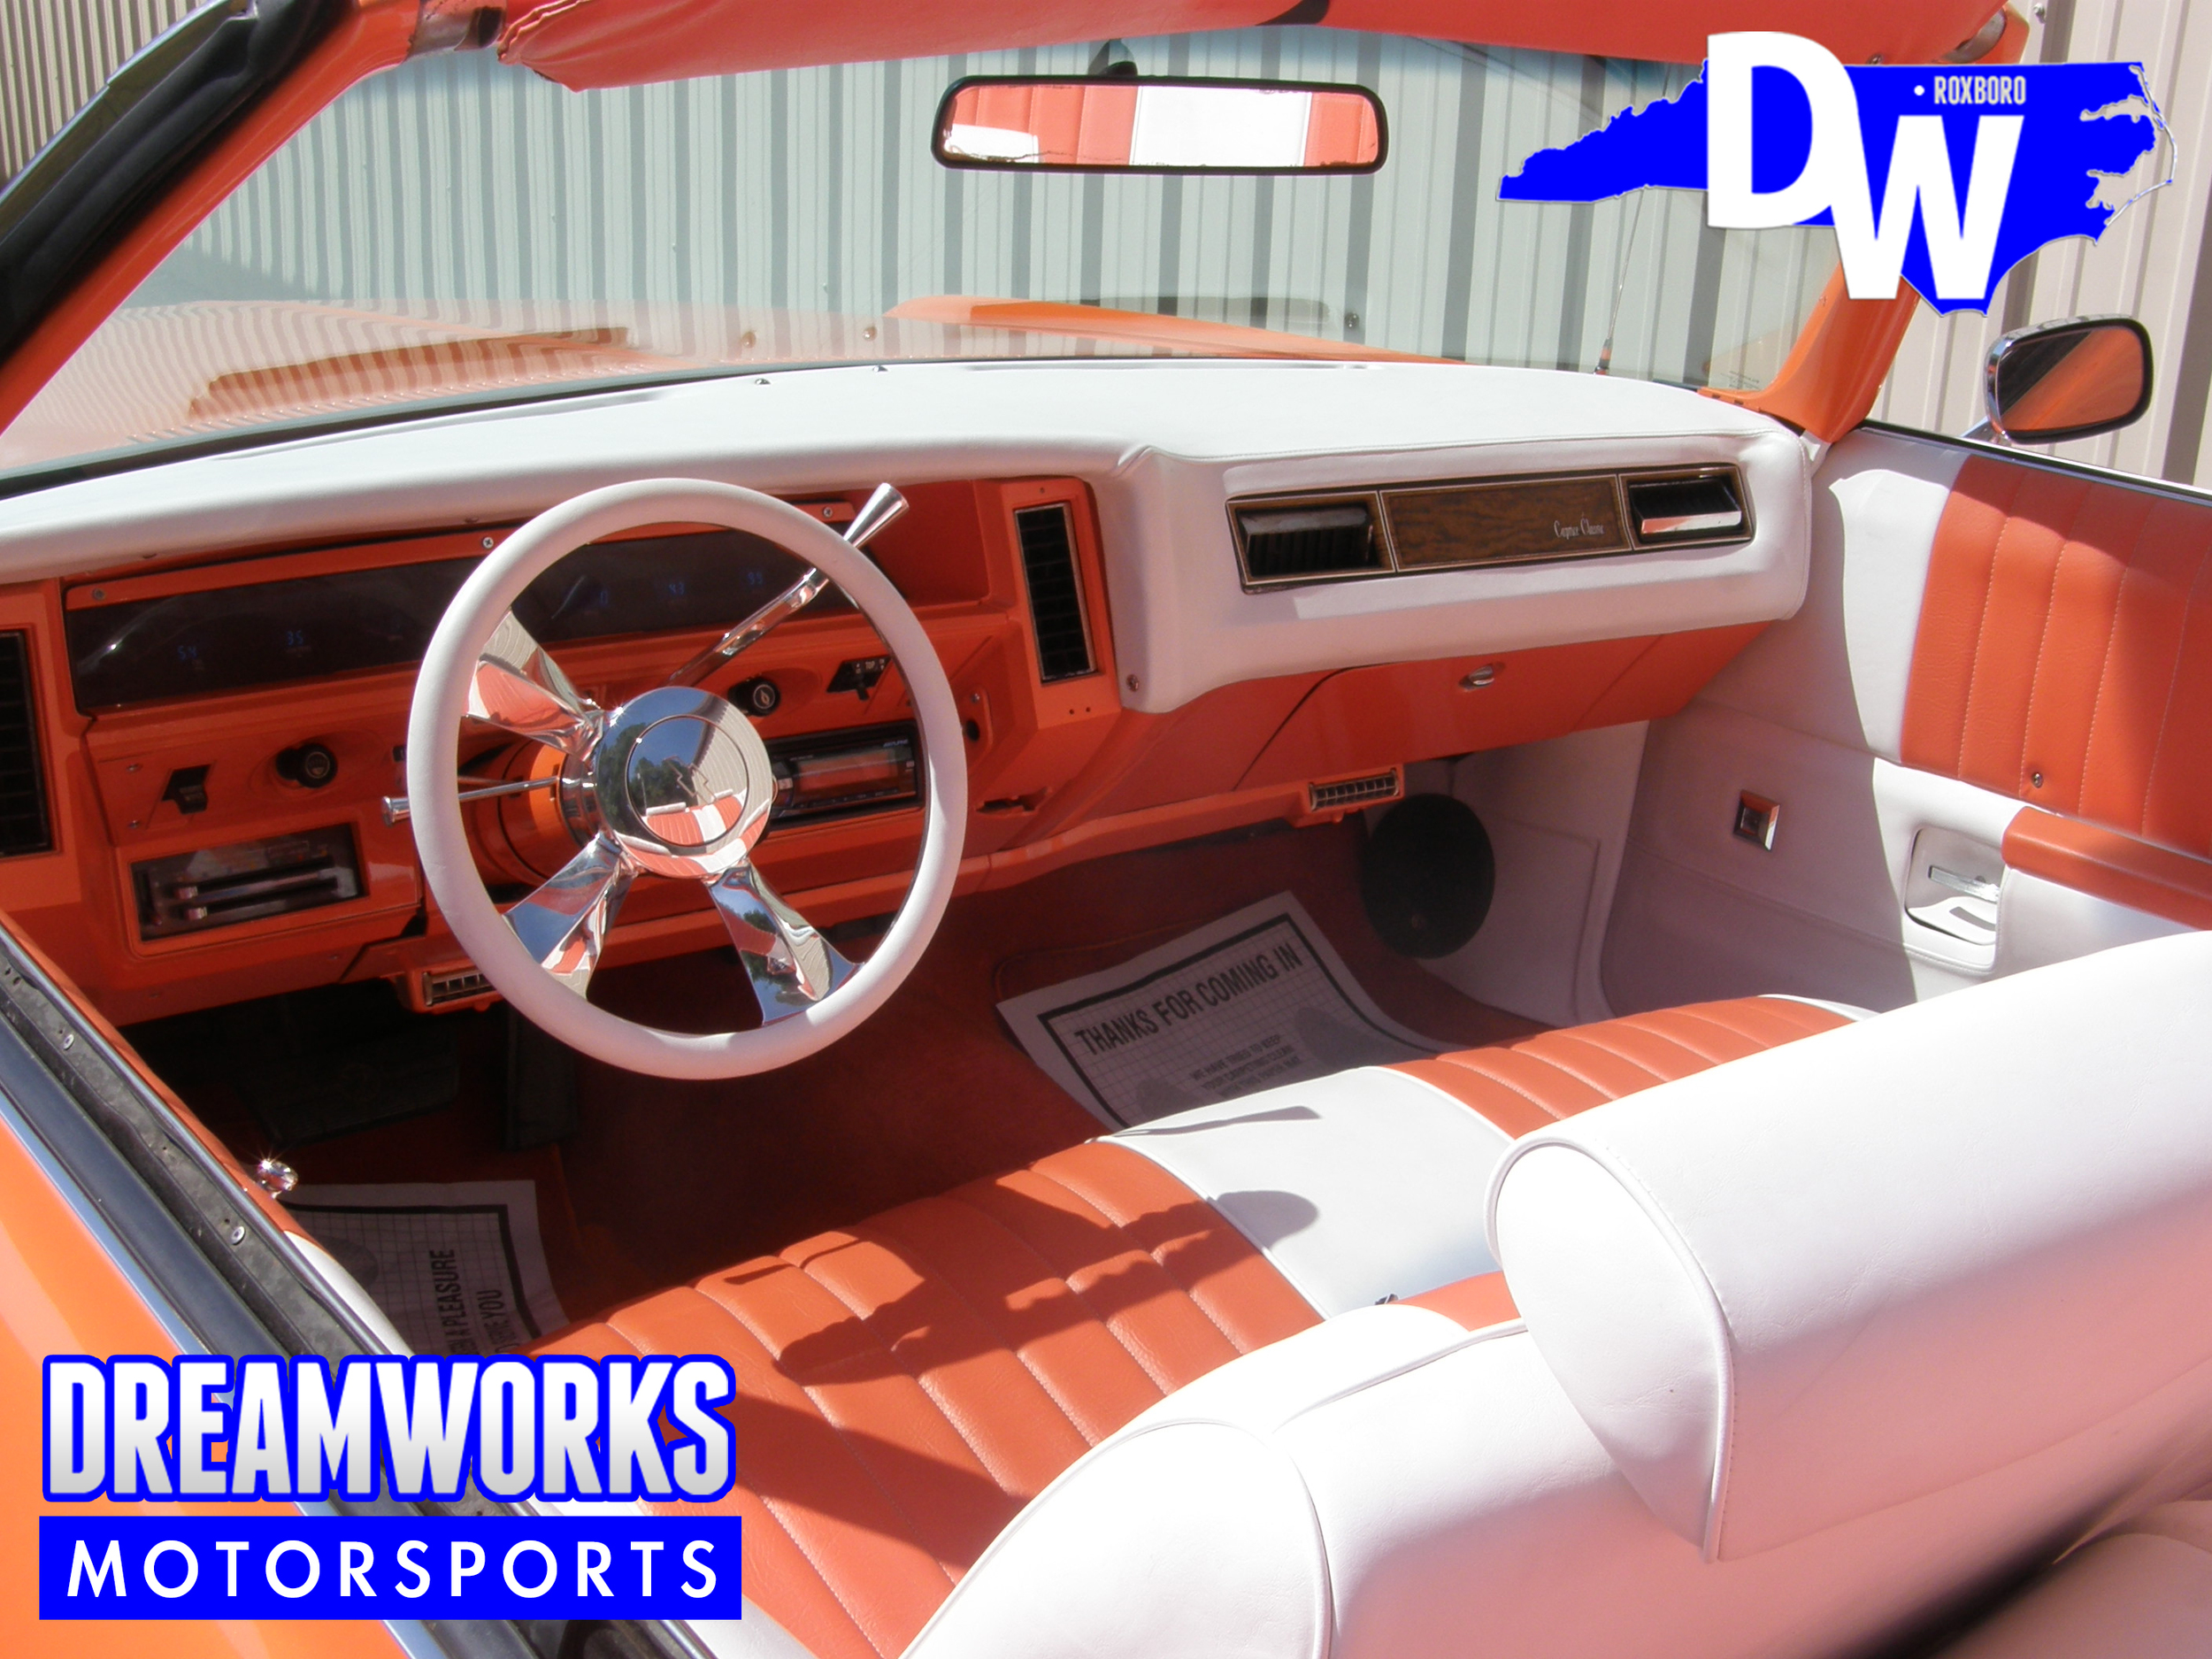 75-Chevrolet-Caprice-DUB-Dreamworks-Motorsports-5.jpg